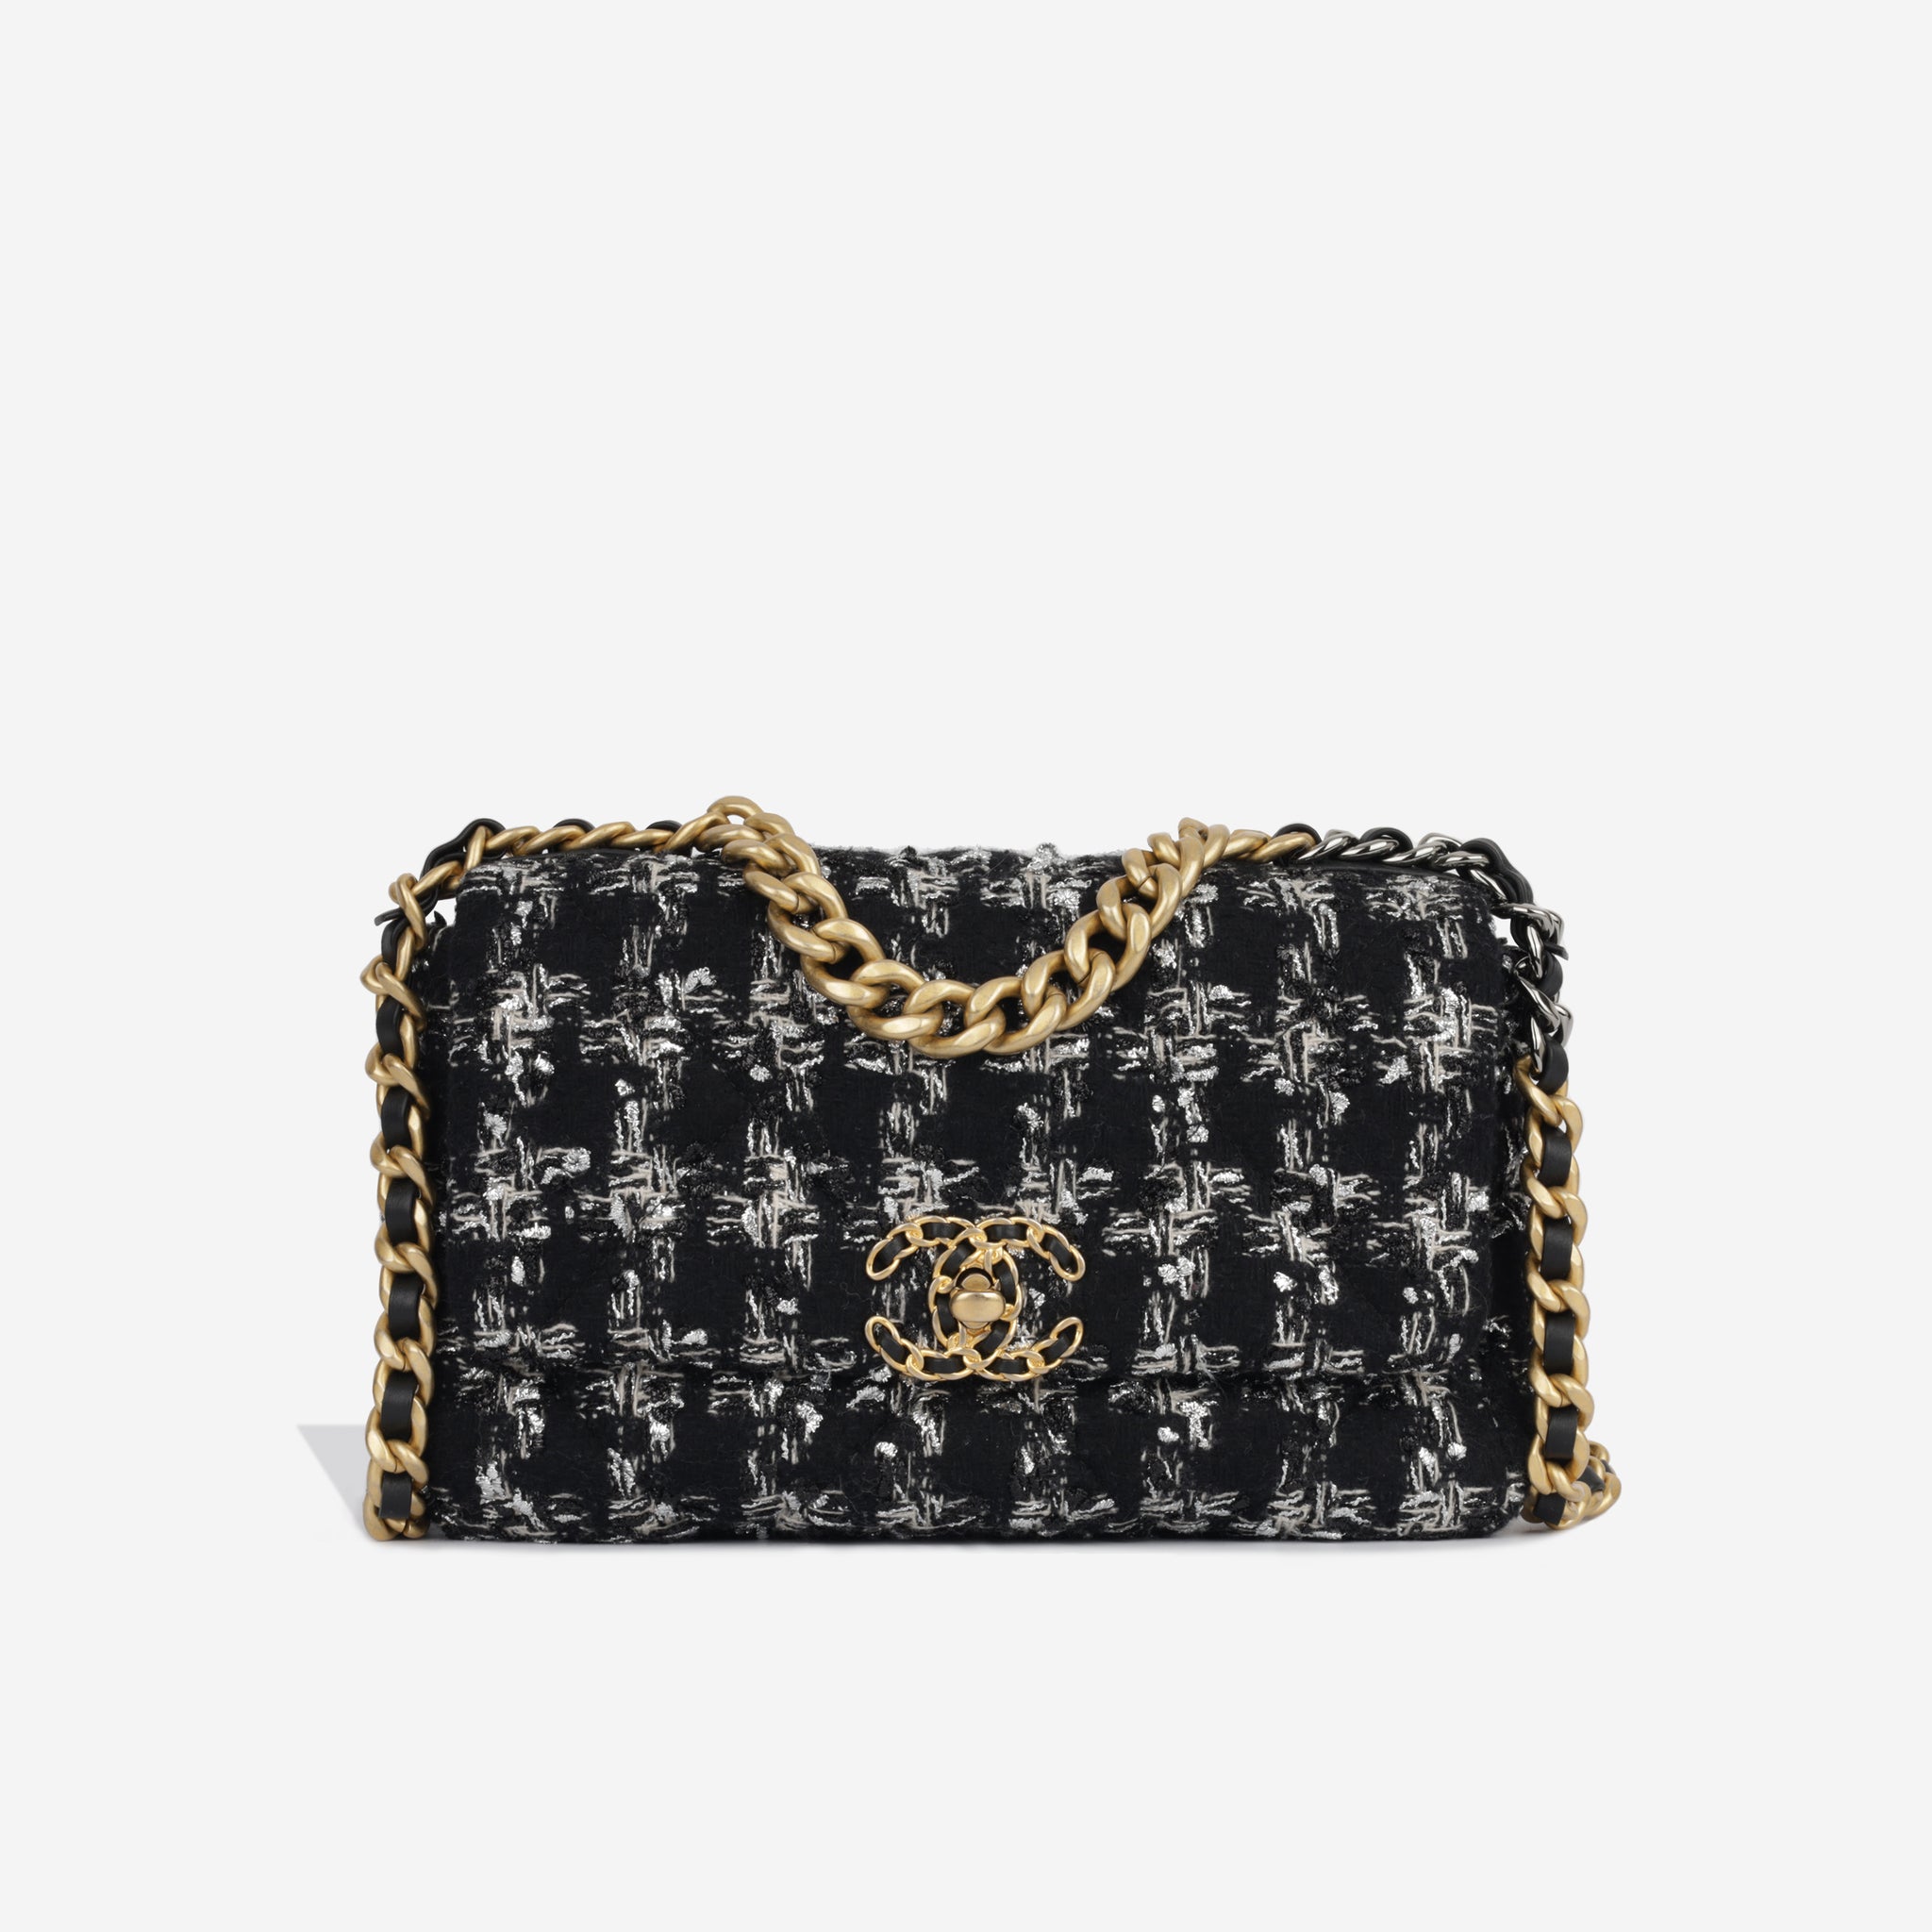 Trending Now: Tweed Chanel Bags